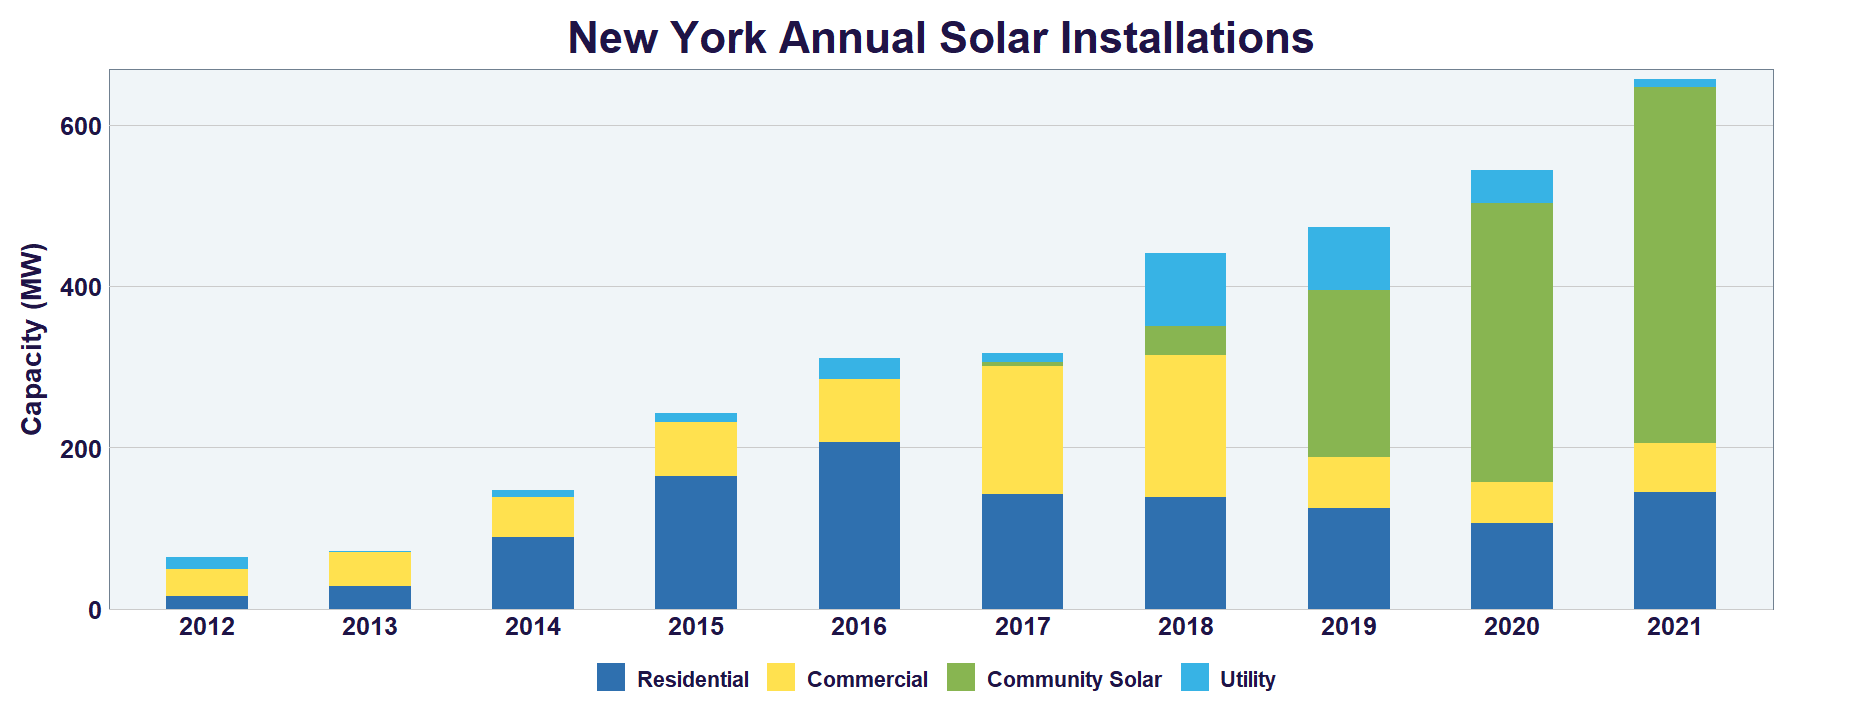 New York hits 1GW of community solar